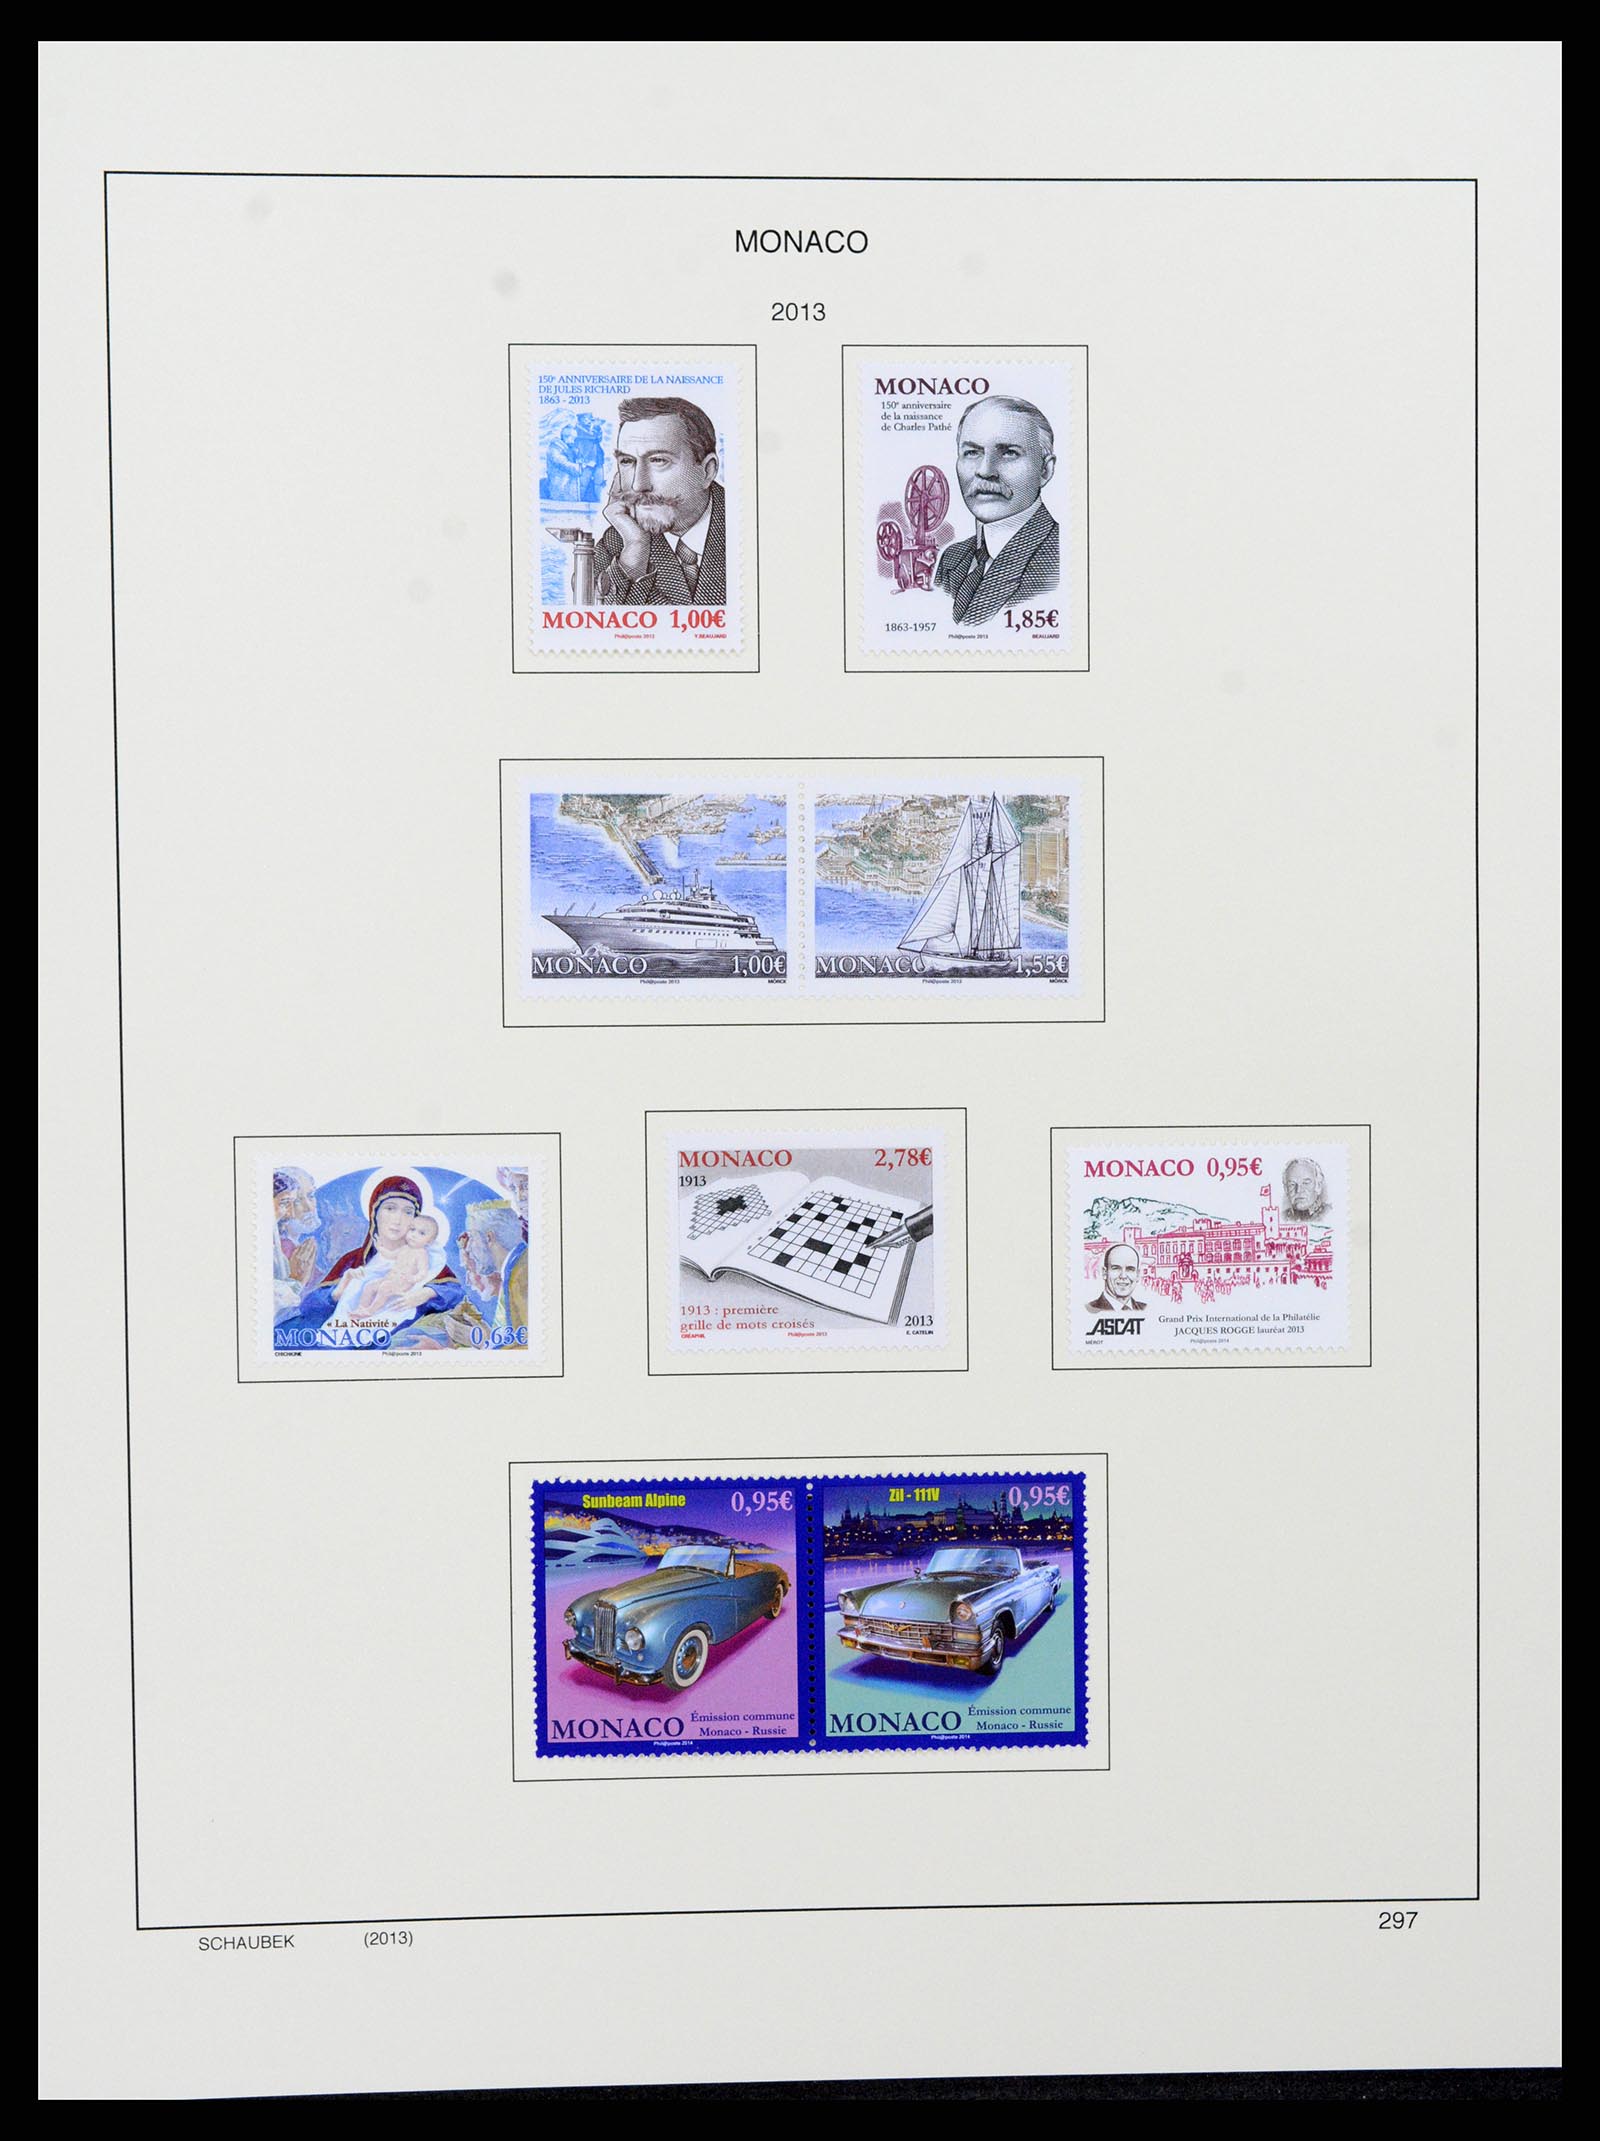 37570 405 - Stamp collection 37570 Monaco 1885-2013.